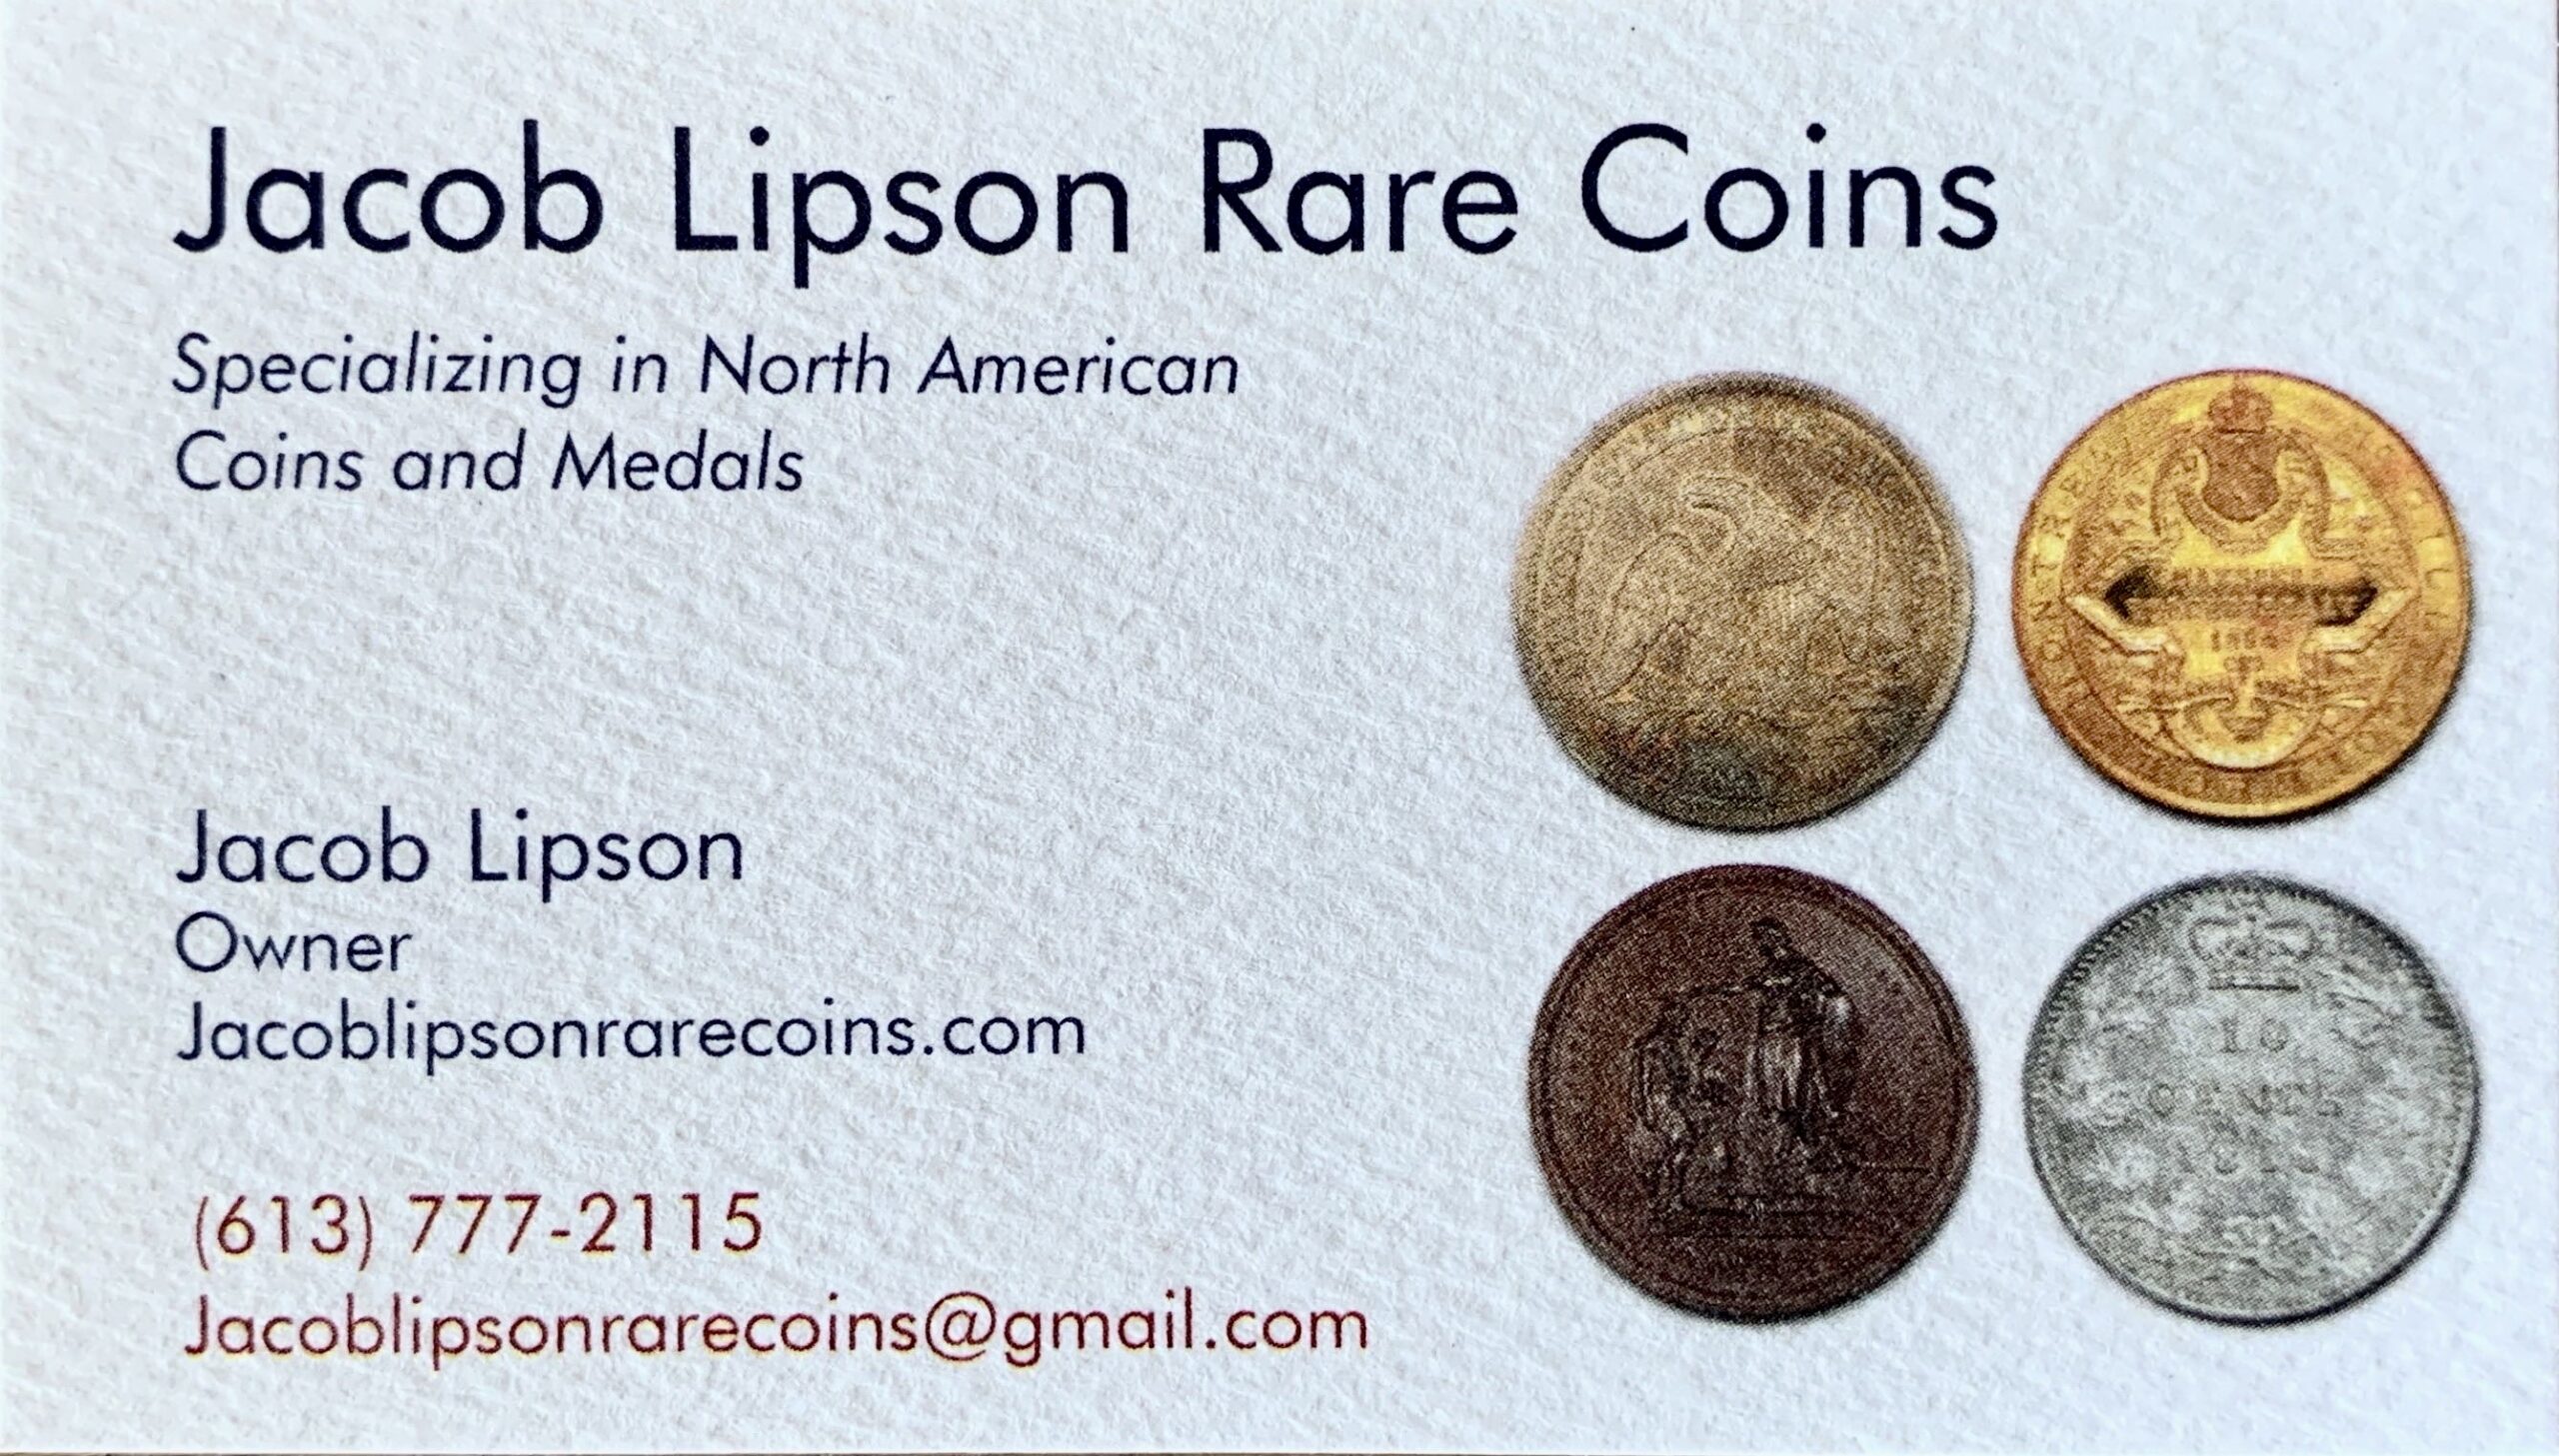 Jacob Lipson Rare Coins